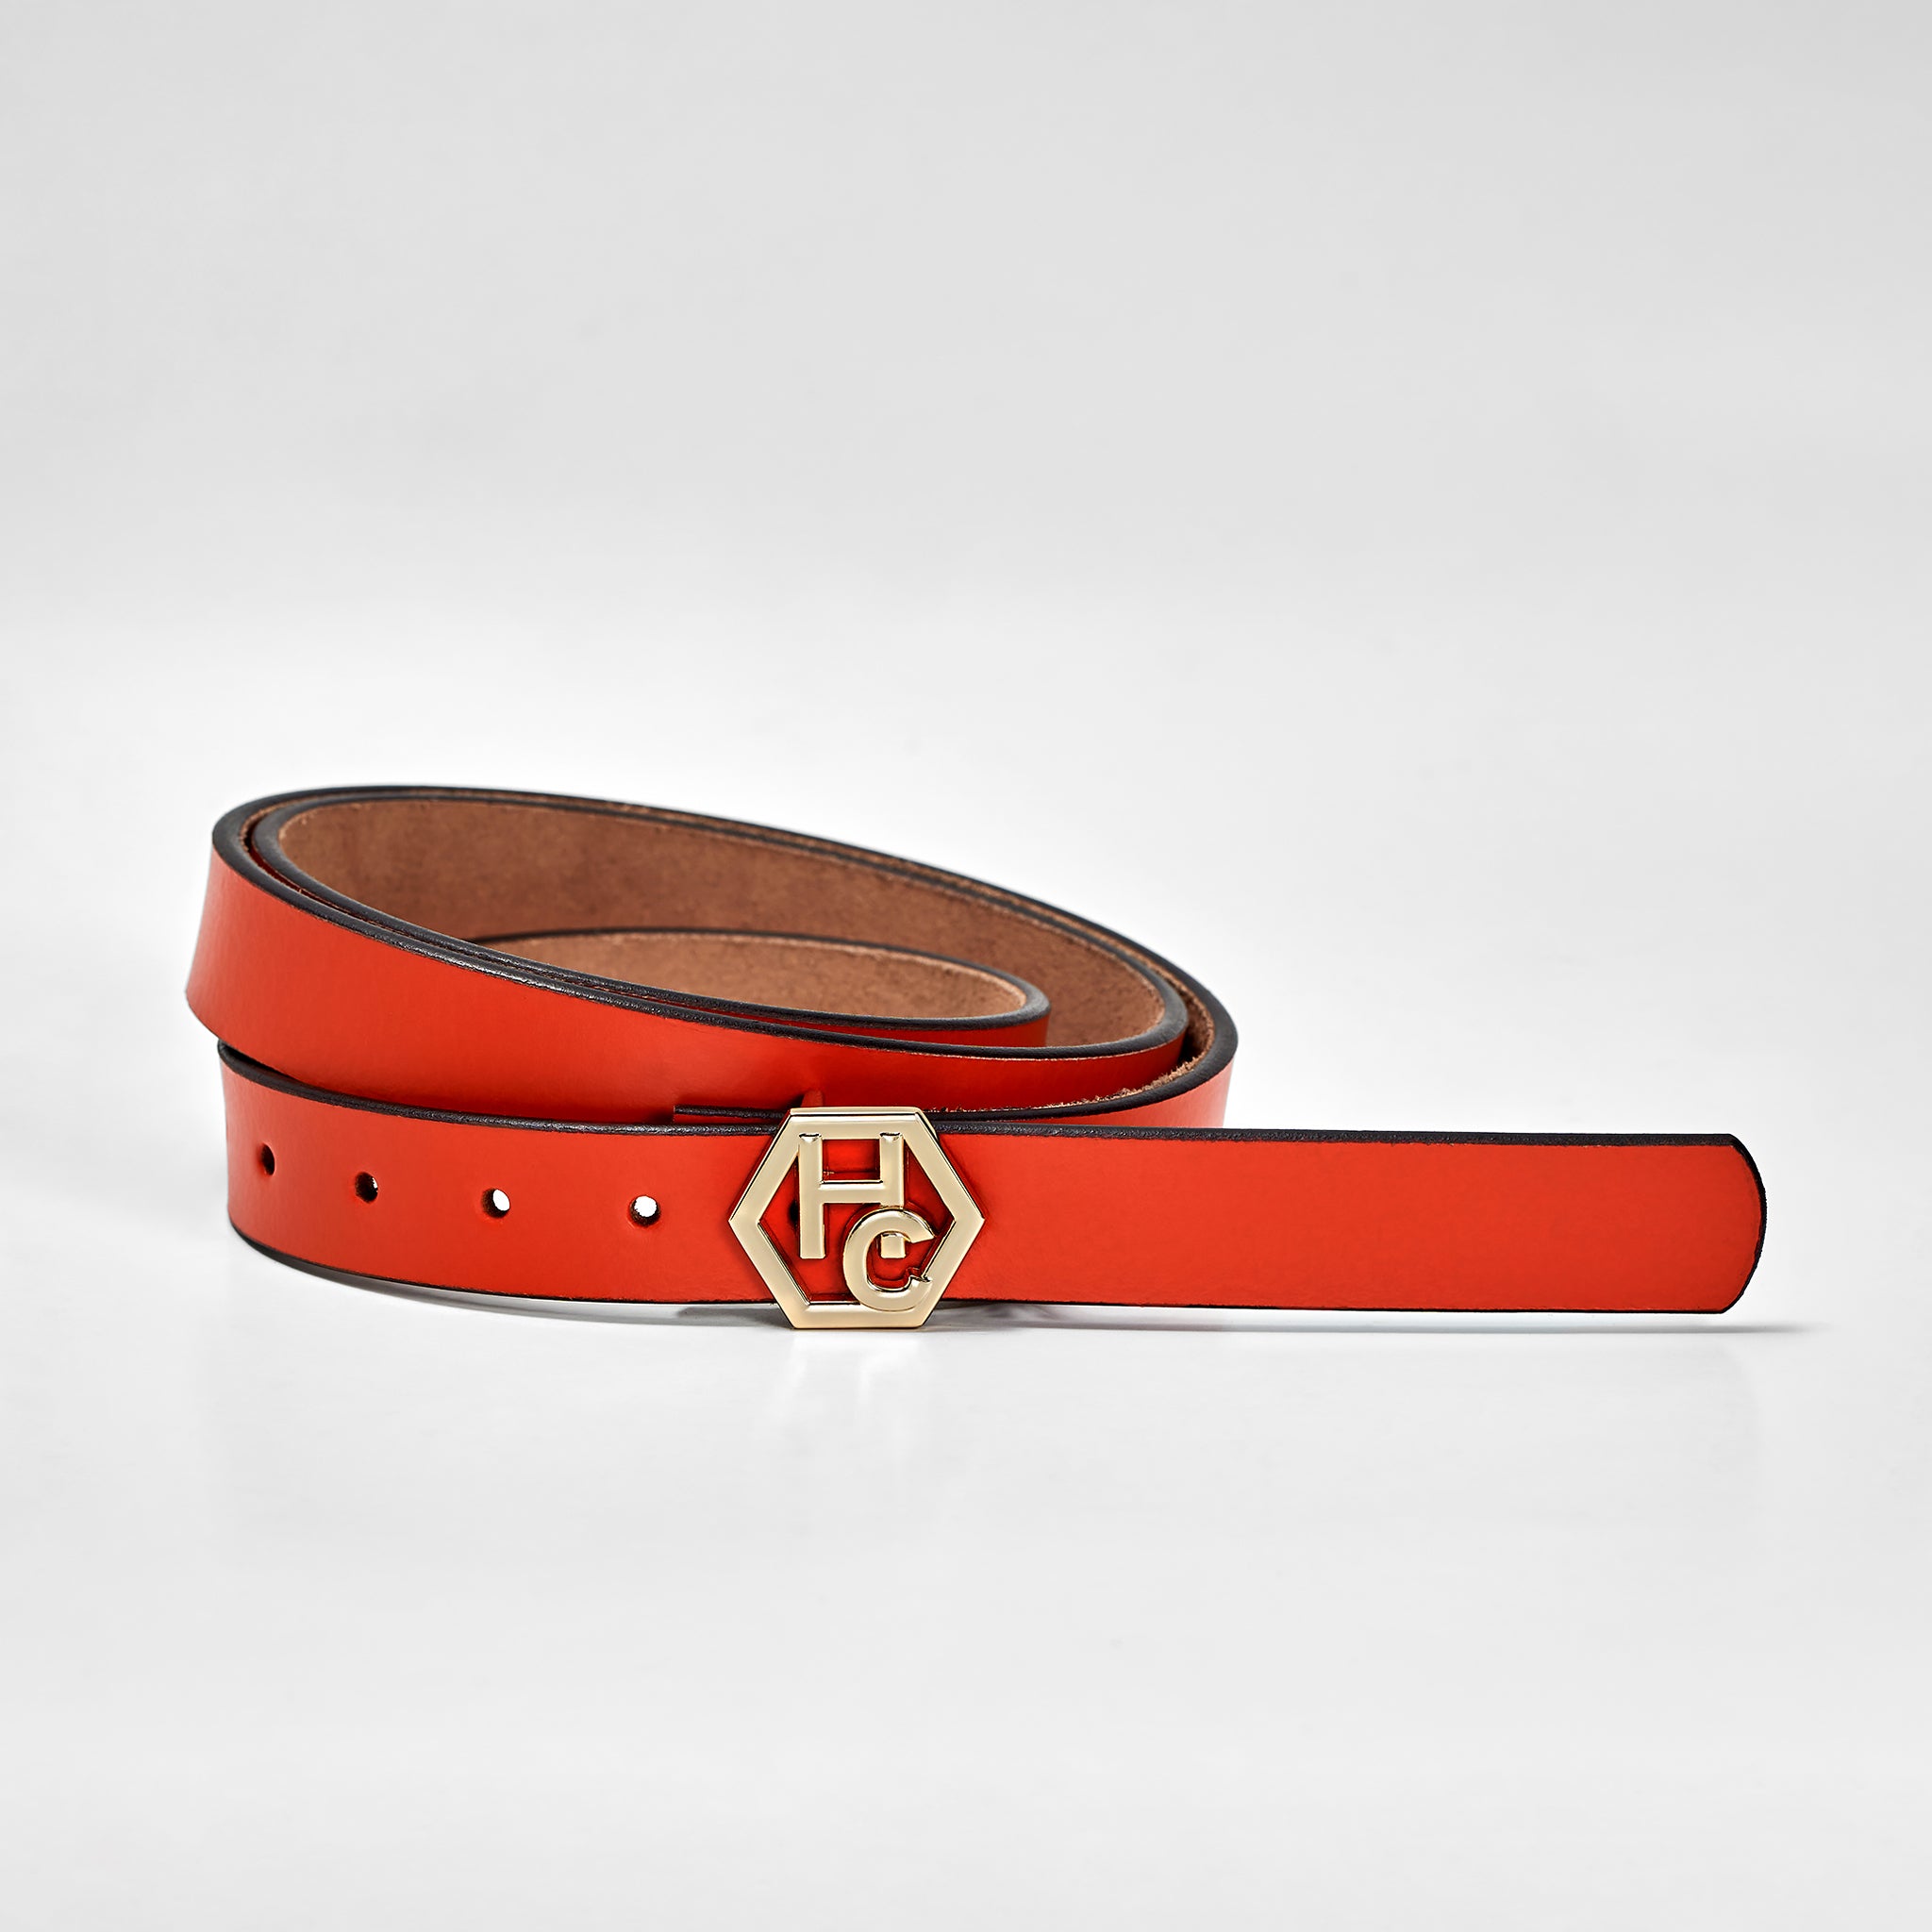 Hedonist Women's Seamless Belt 1" Orange Red